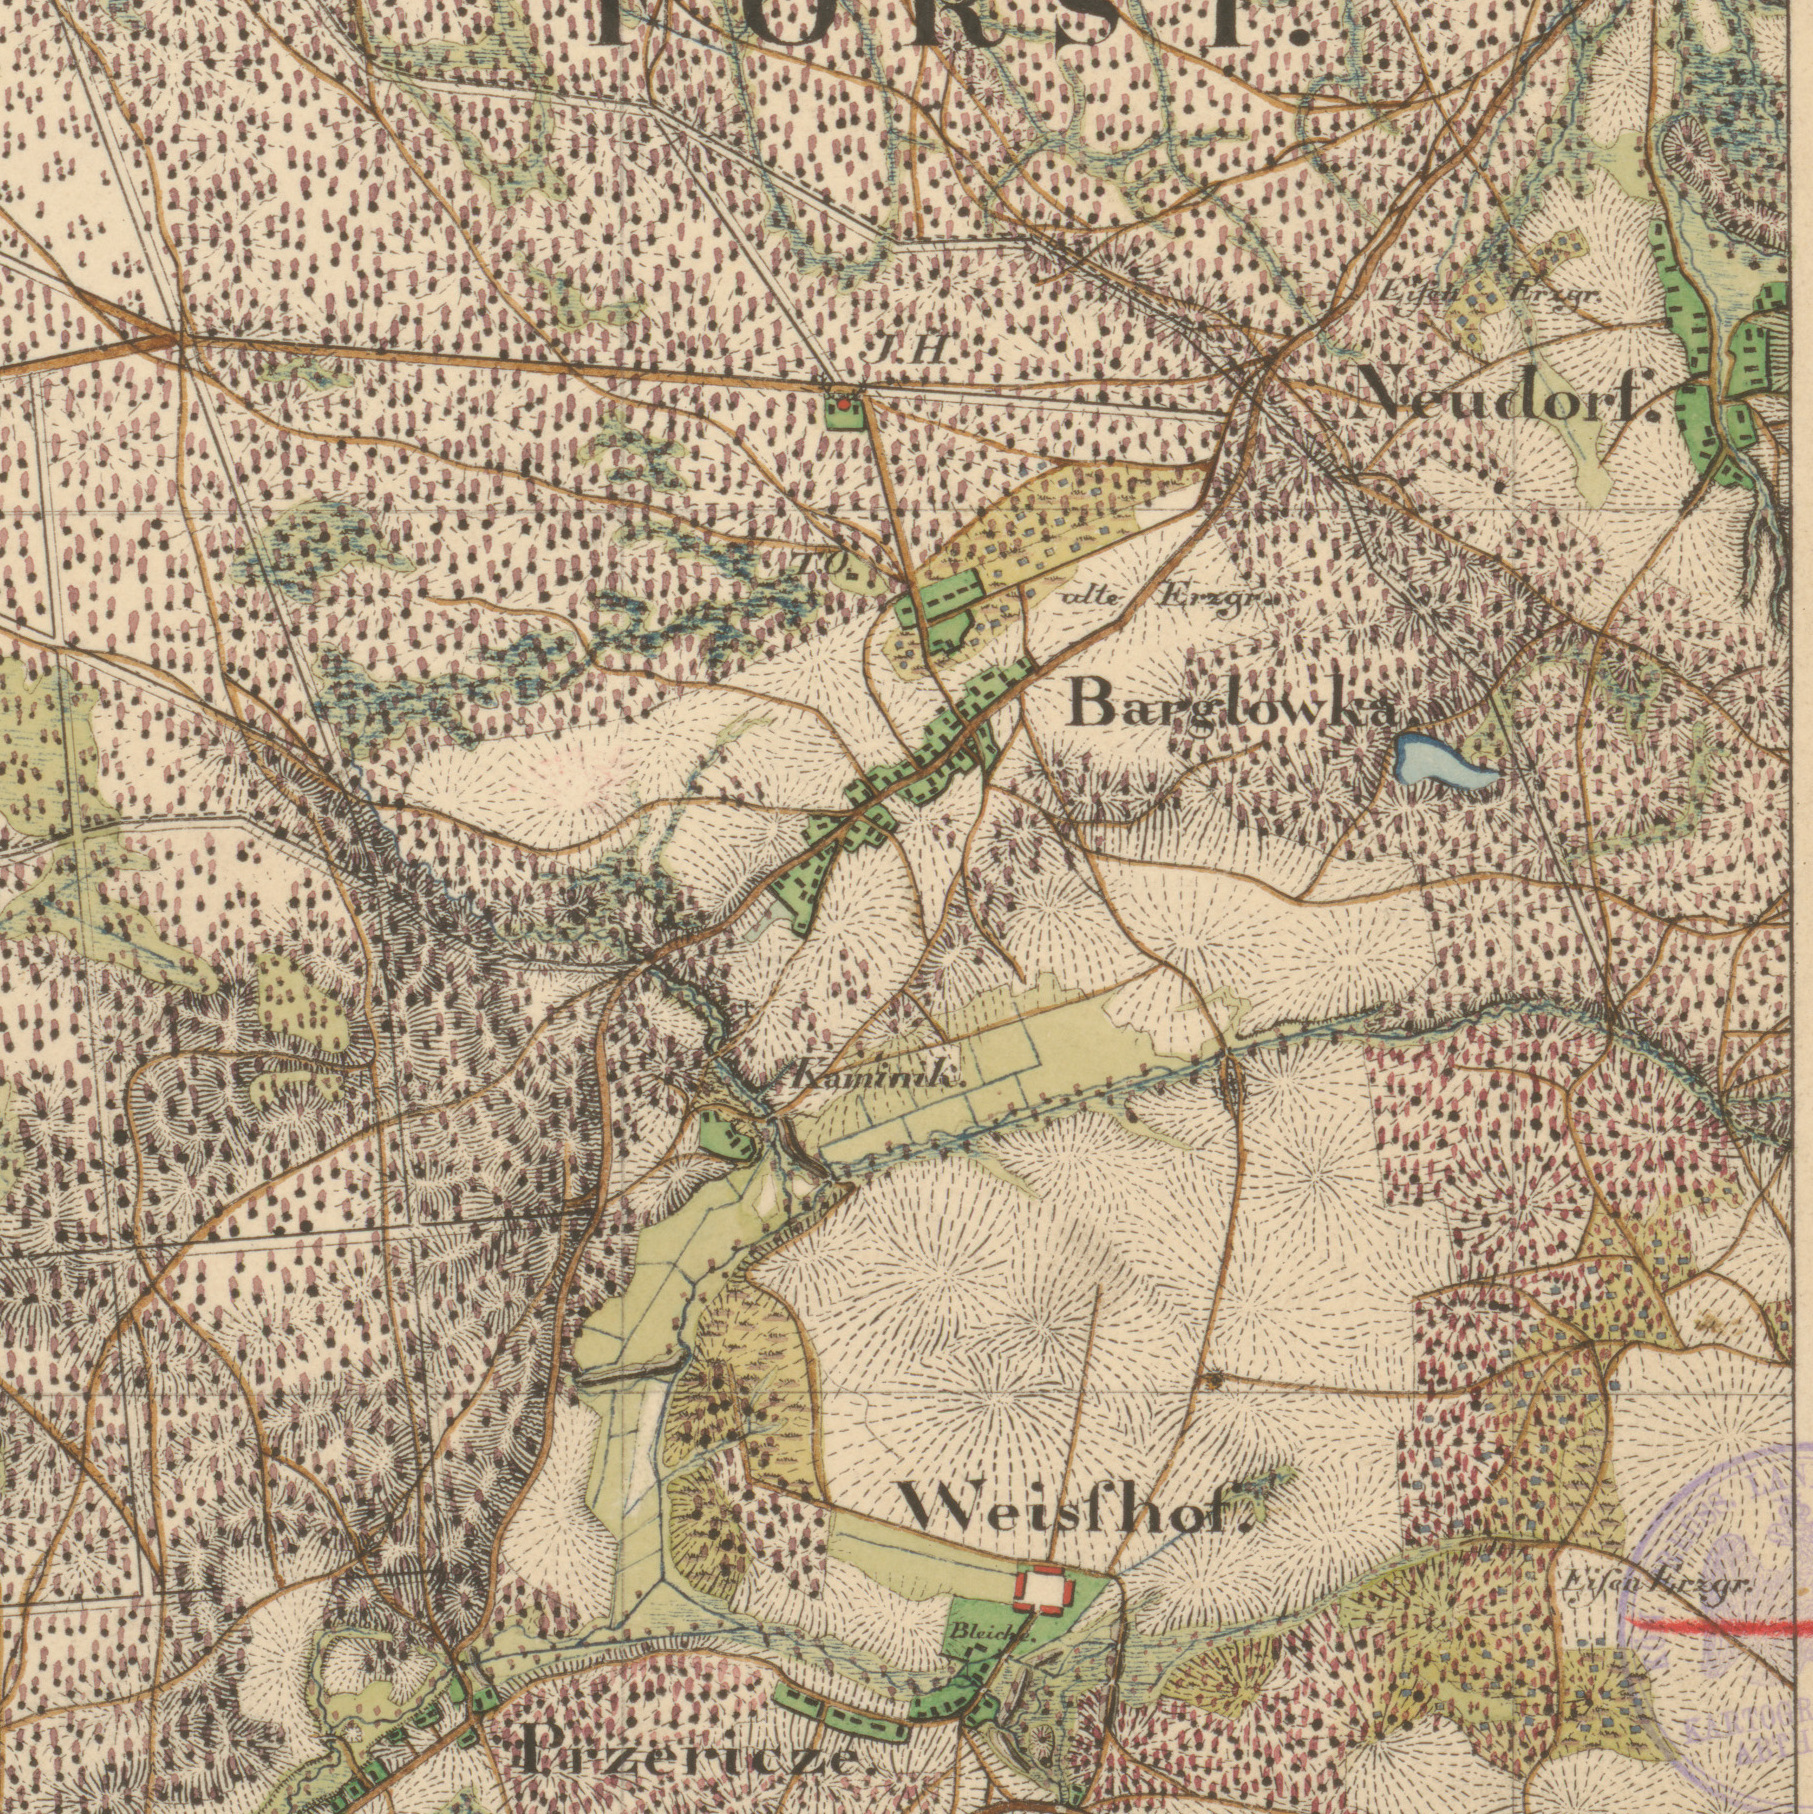 Bargłowka na mapie Urmeßtischblatt z 1827 r.